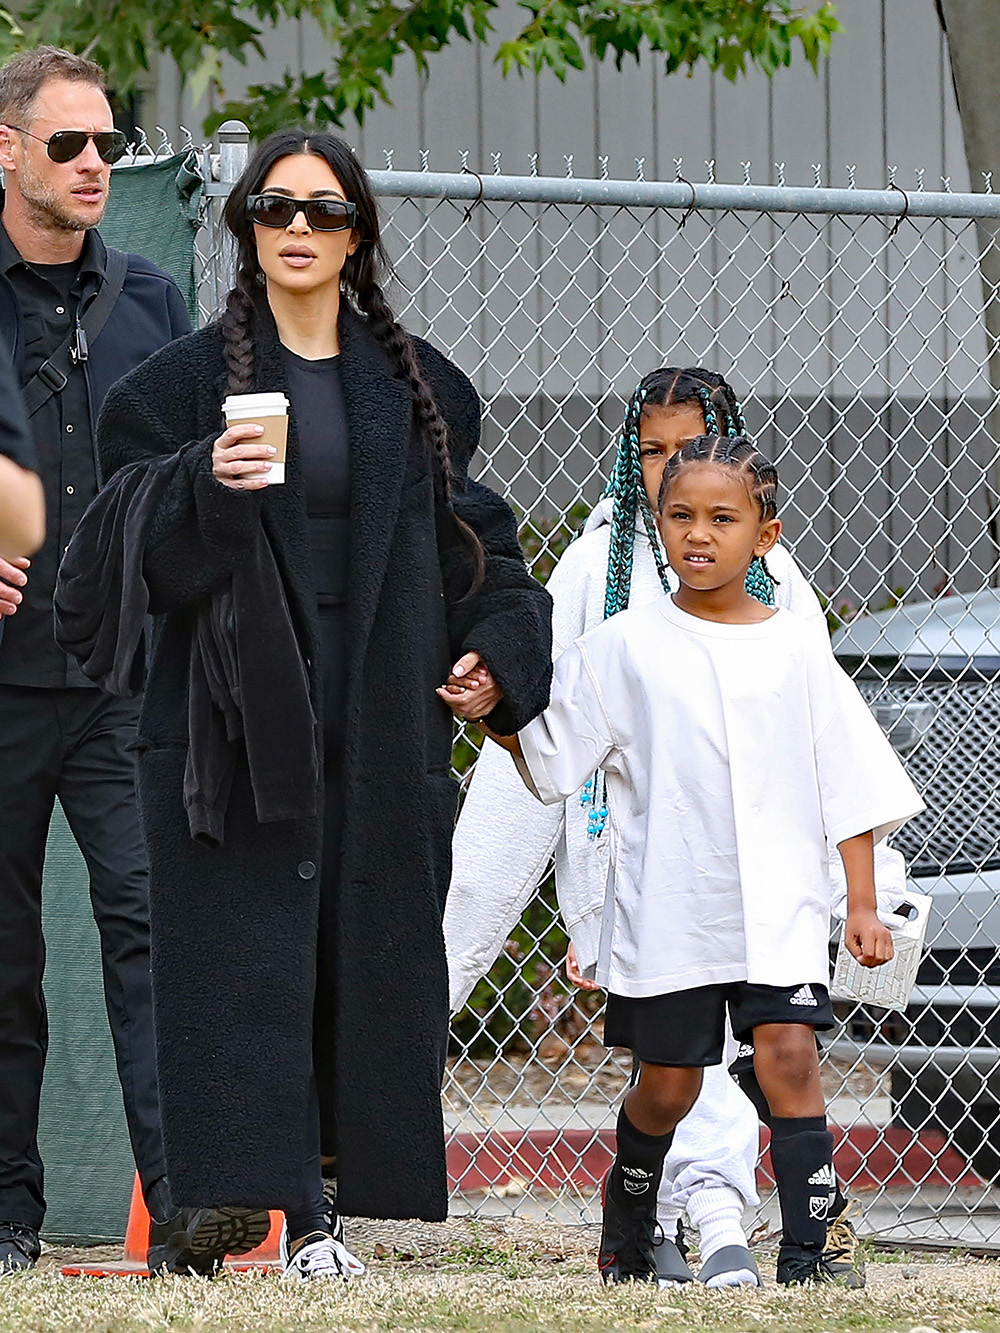 Kim Kardashian takes her kids to watch Saint play a soccer match in Calabasas. 03 Apr 2022 Pictured: Kim Kardashian. Photo credit: P&P / MEGA TheMegaAgency.com +1 888 505 6342 (Mega Agency TagID: MEGA844386_006.jpg) [Photo via Mega Agency]